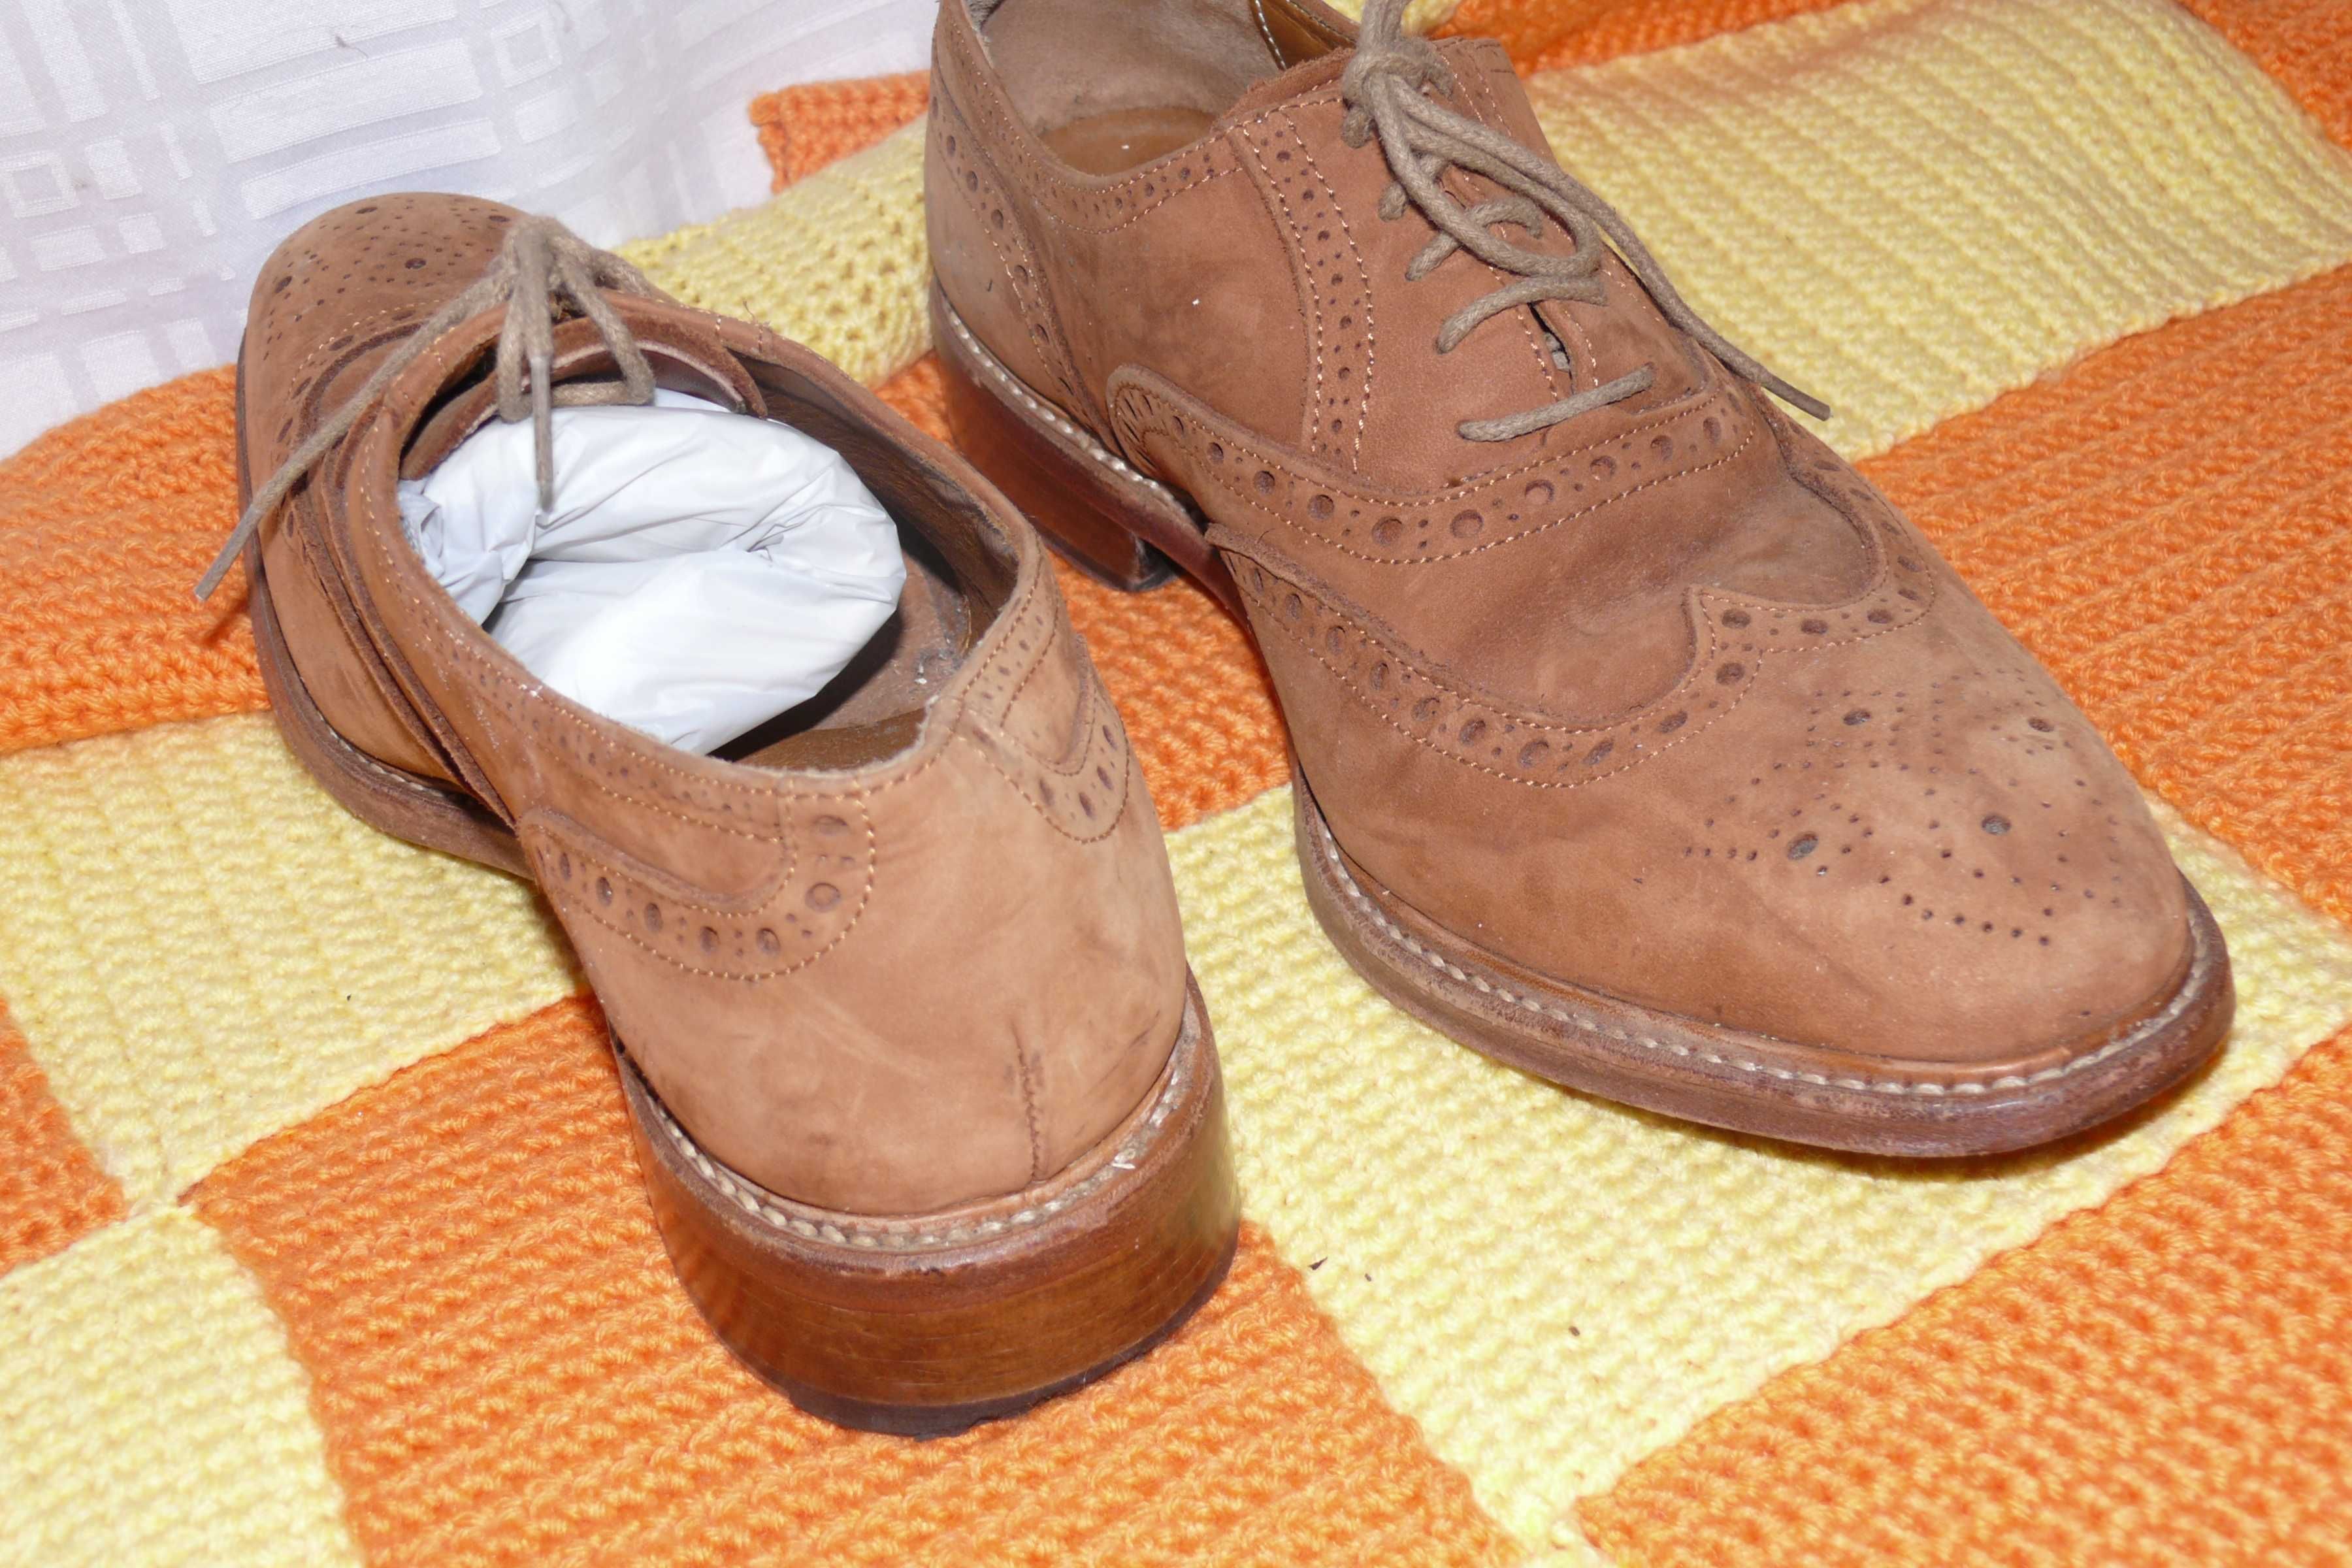 Sapatos Homem - Goodyear Welted